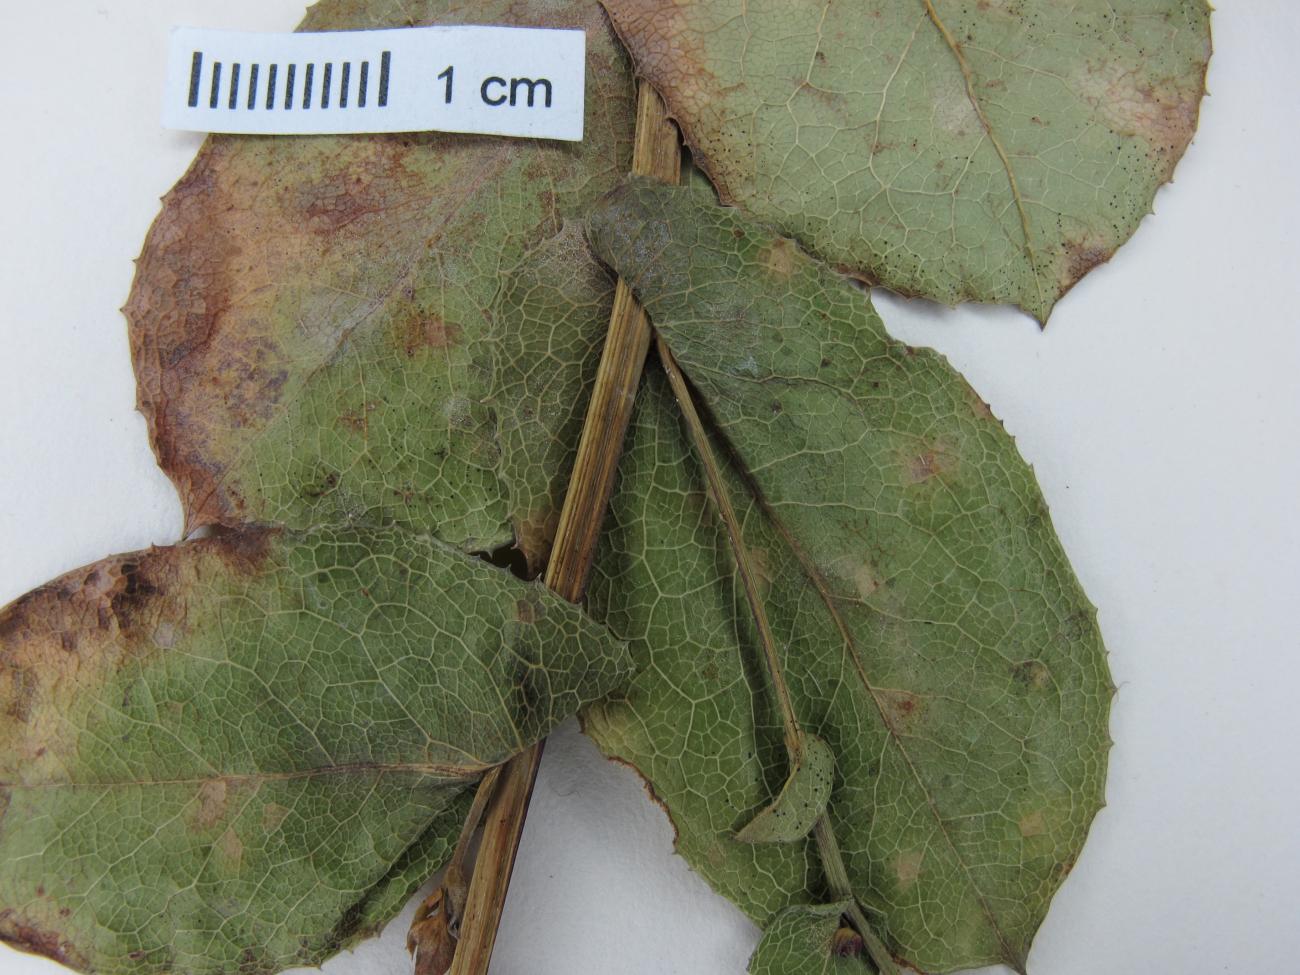 Acourtia platyphylla image